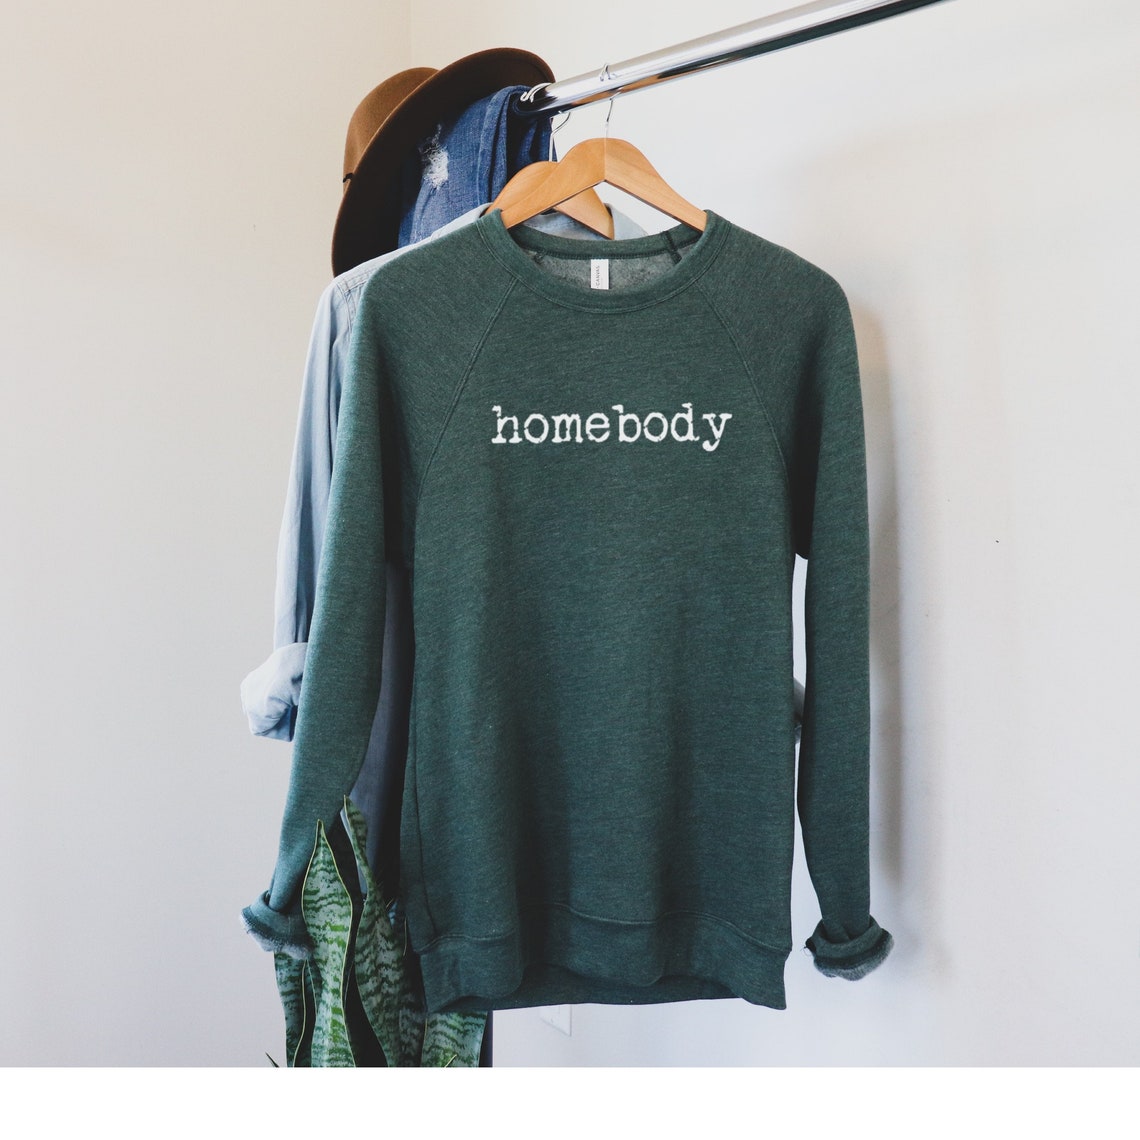 Homebody Crewneck Sweatshirt Stay at Home Sweatshirt Fall | Etsy